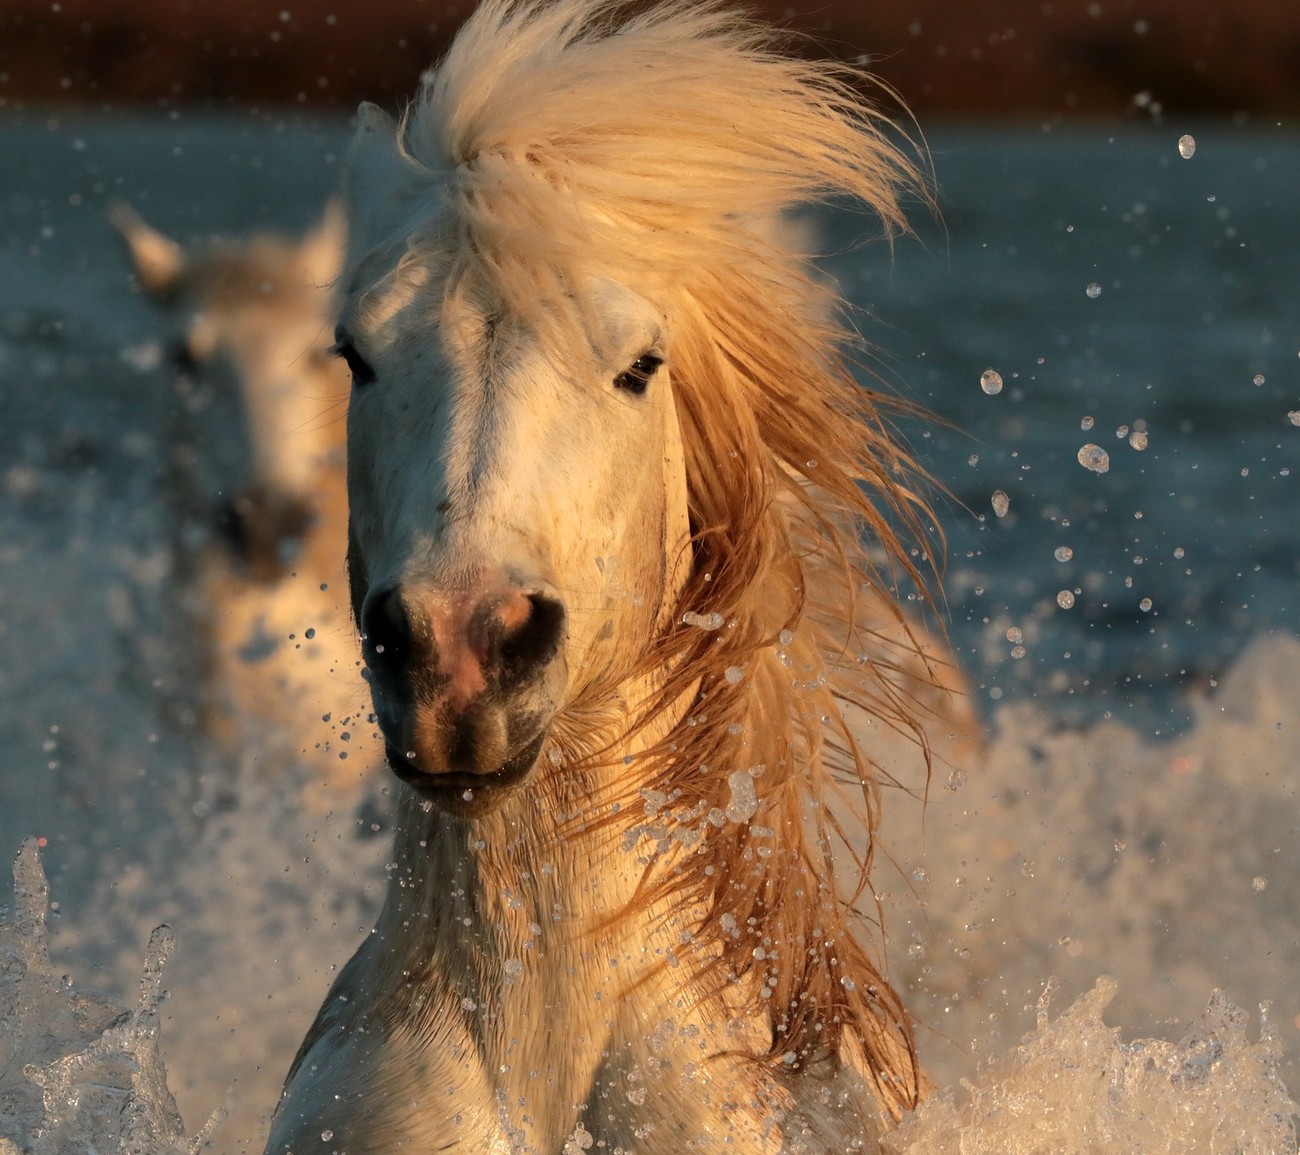 Horses Photo Contest 2015 Winners